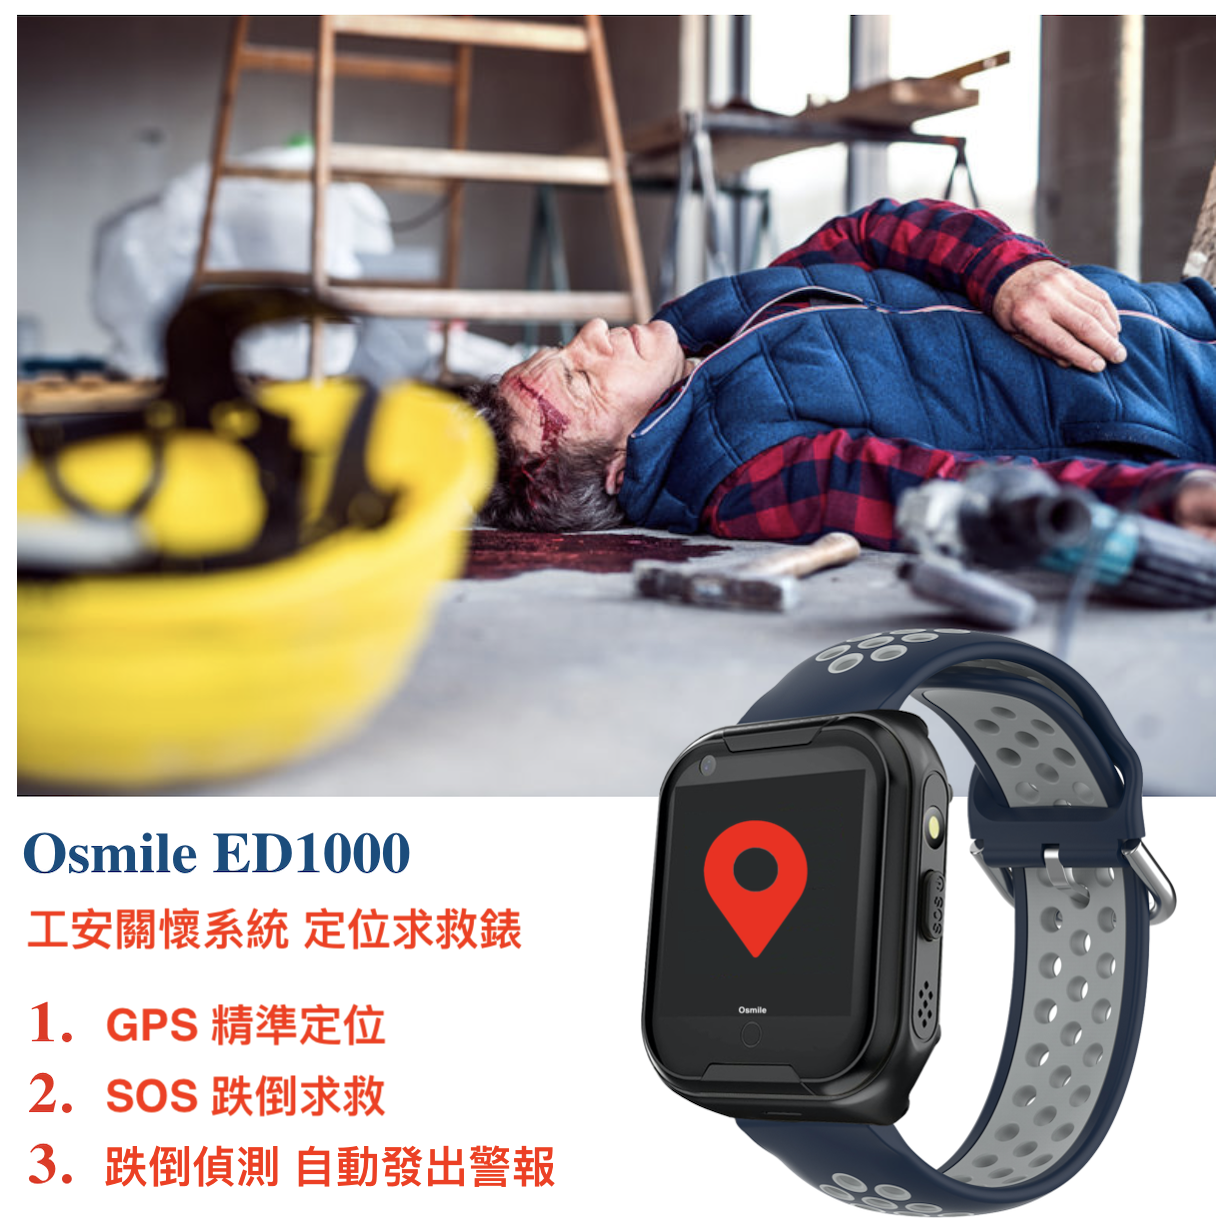 Osmile ED1000 工安關懷系統定位手錶 (獨立作業員工）Lone worker